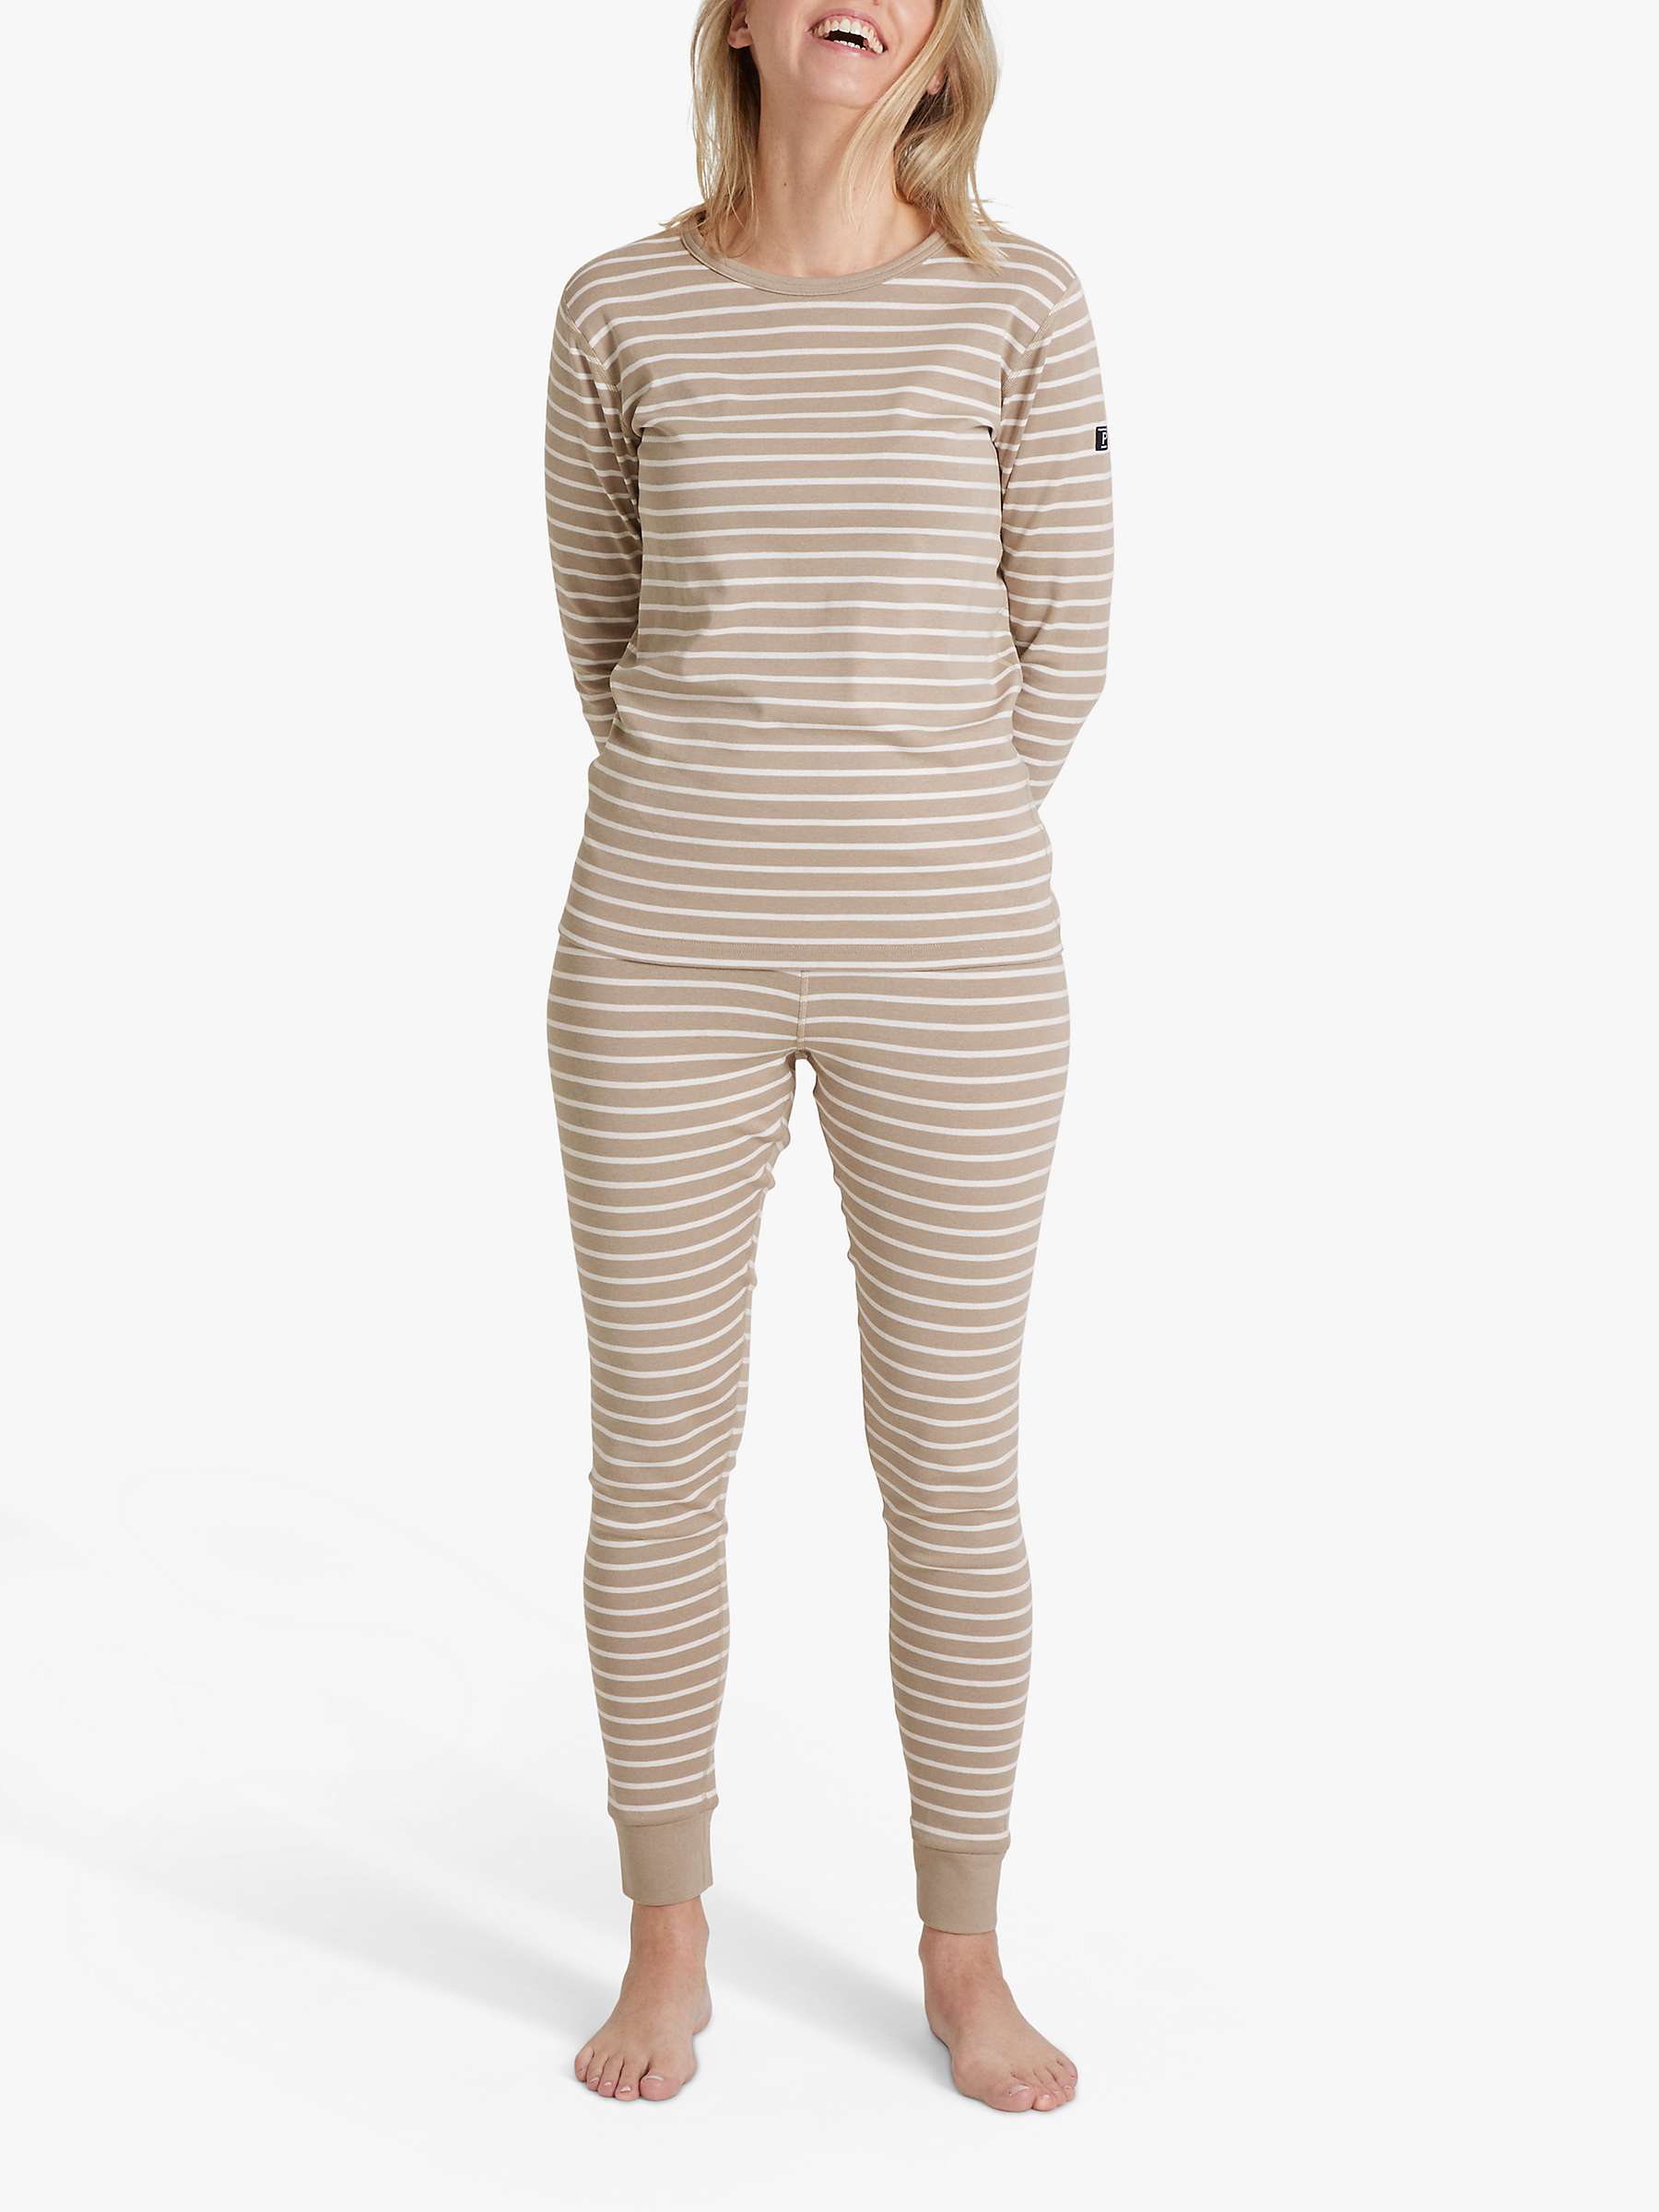 Buy Polarn O. Pyret Adult Organic Cotton Stripe Pyjamas Online at johnlewis.com